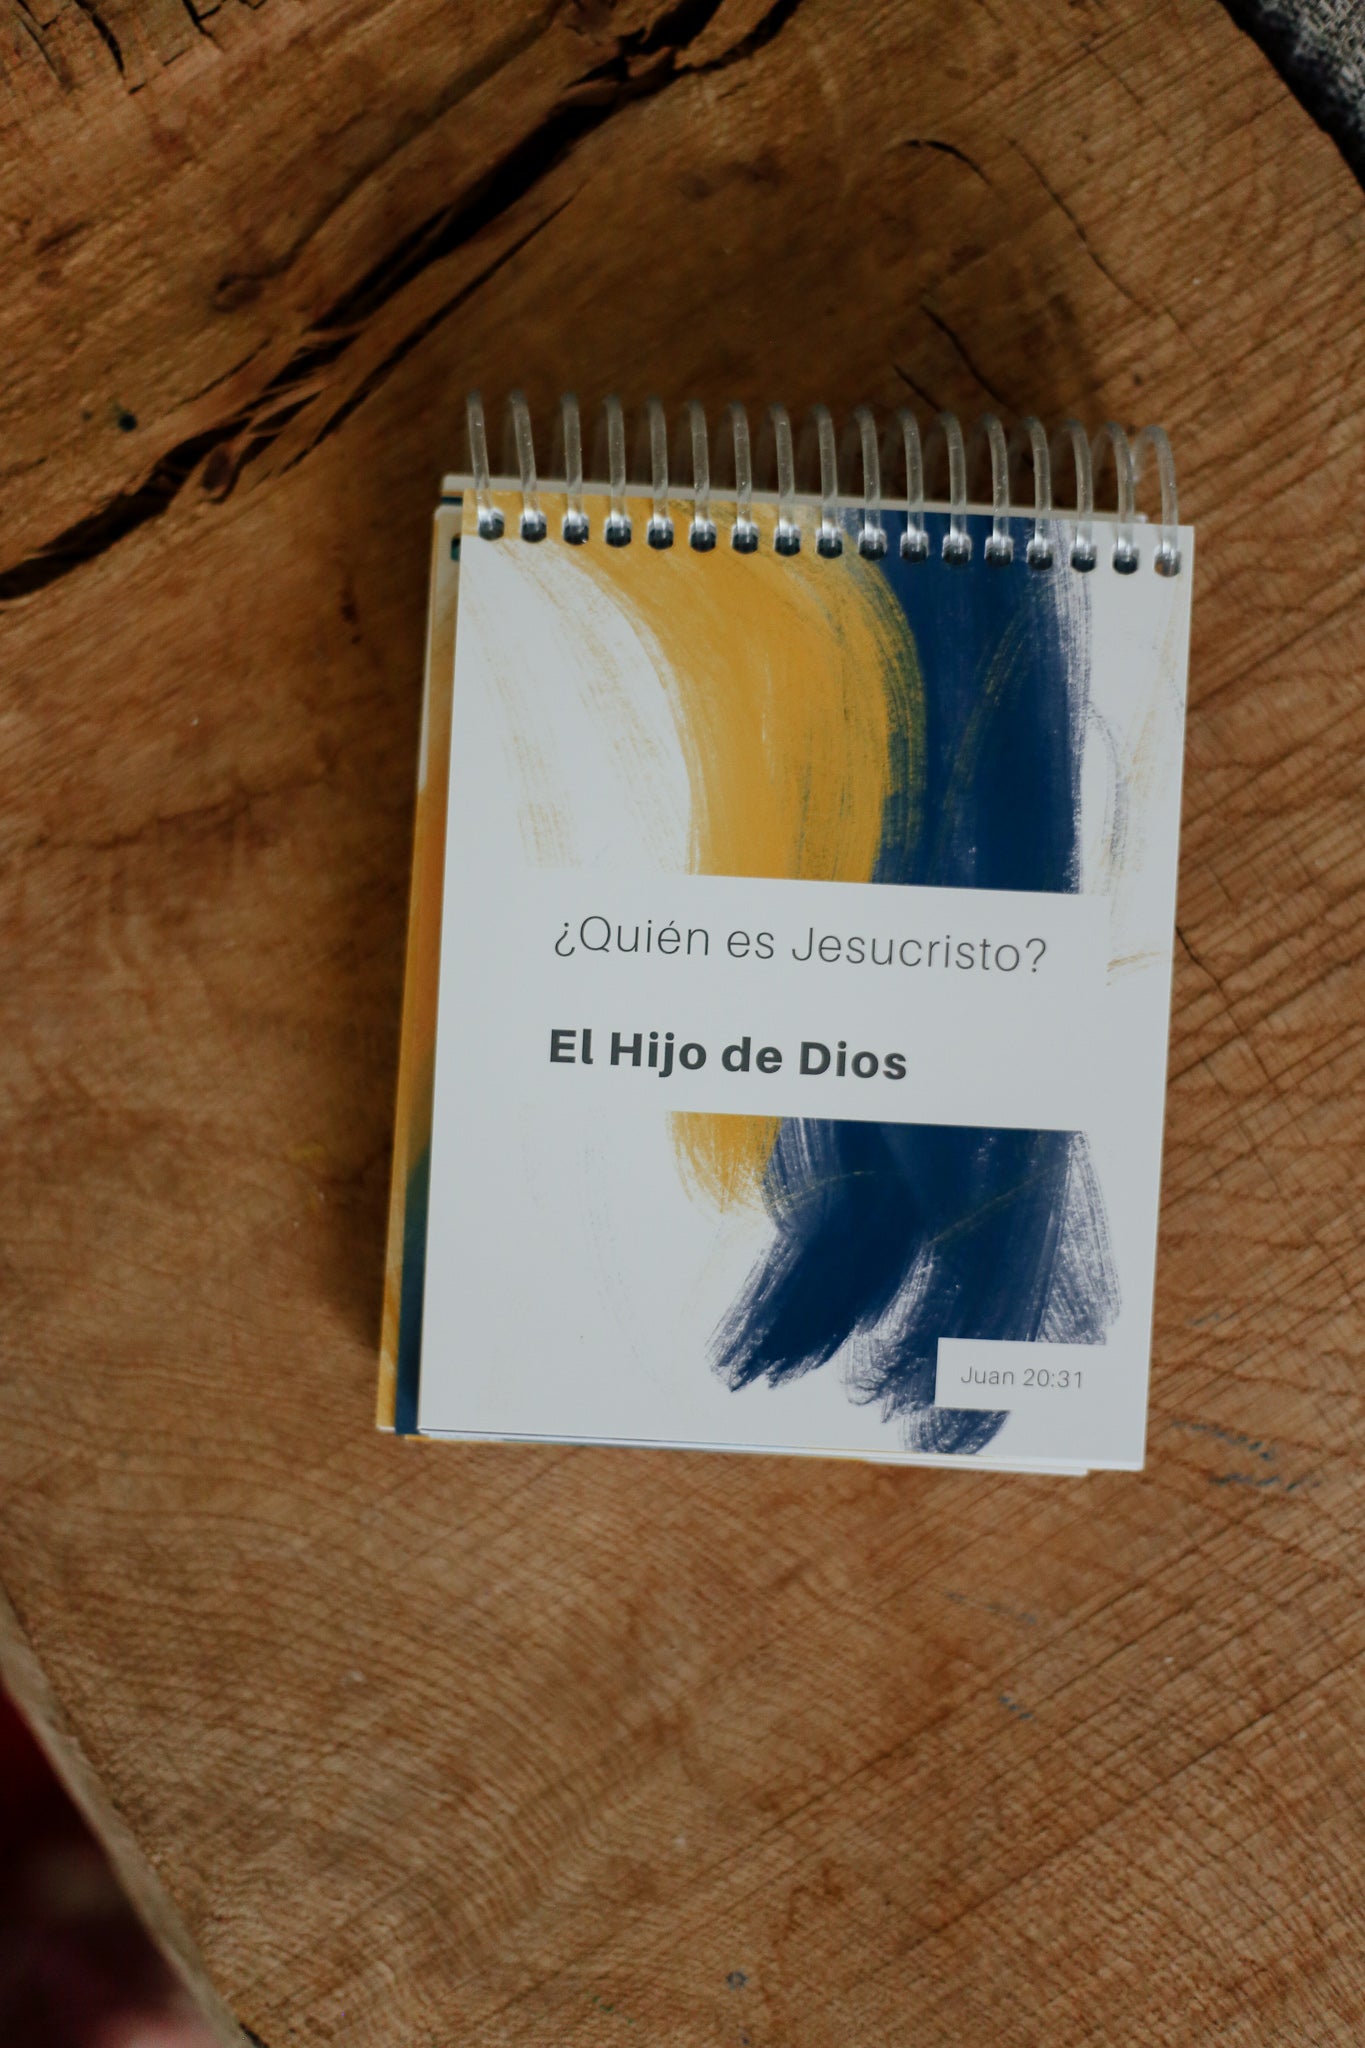 The Spanish Basics Catechism